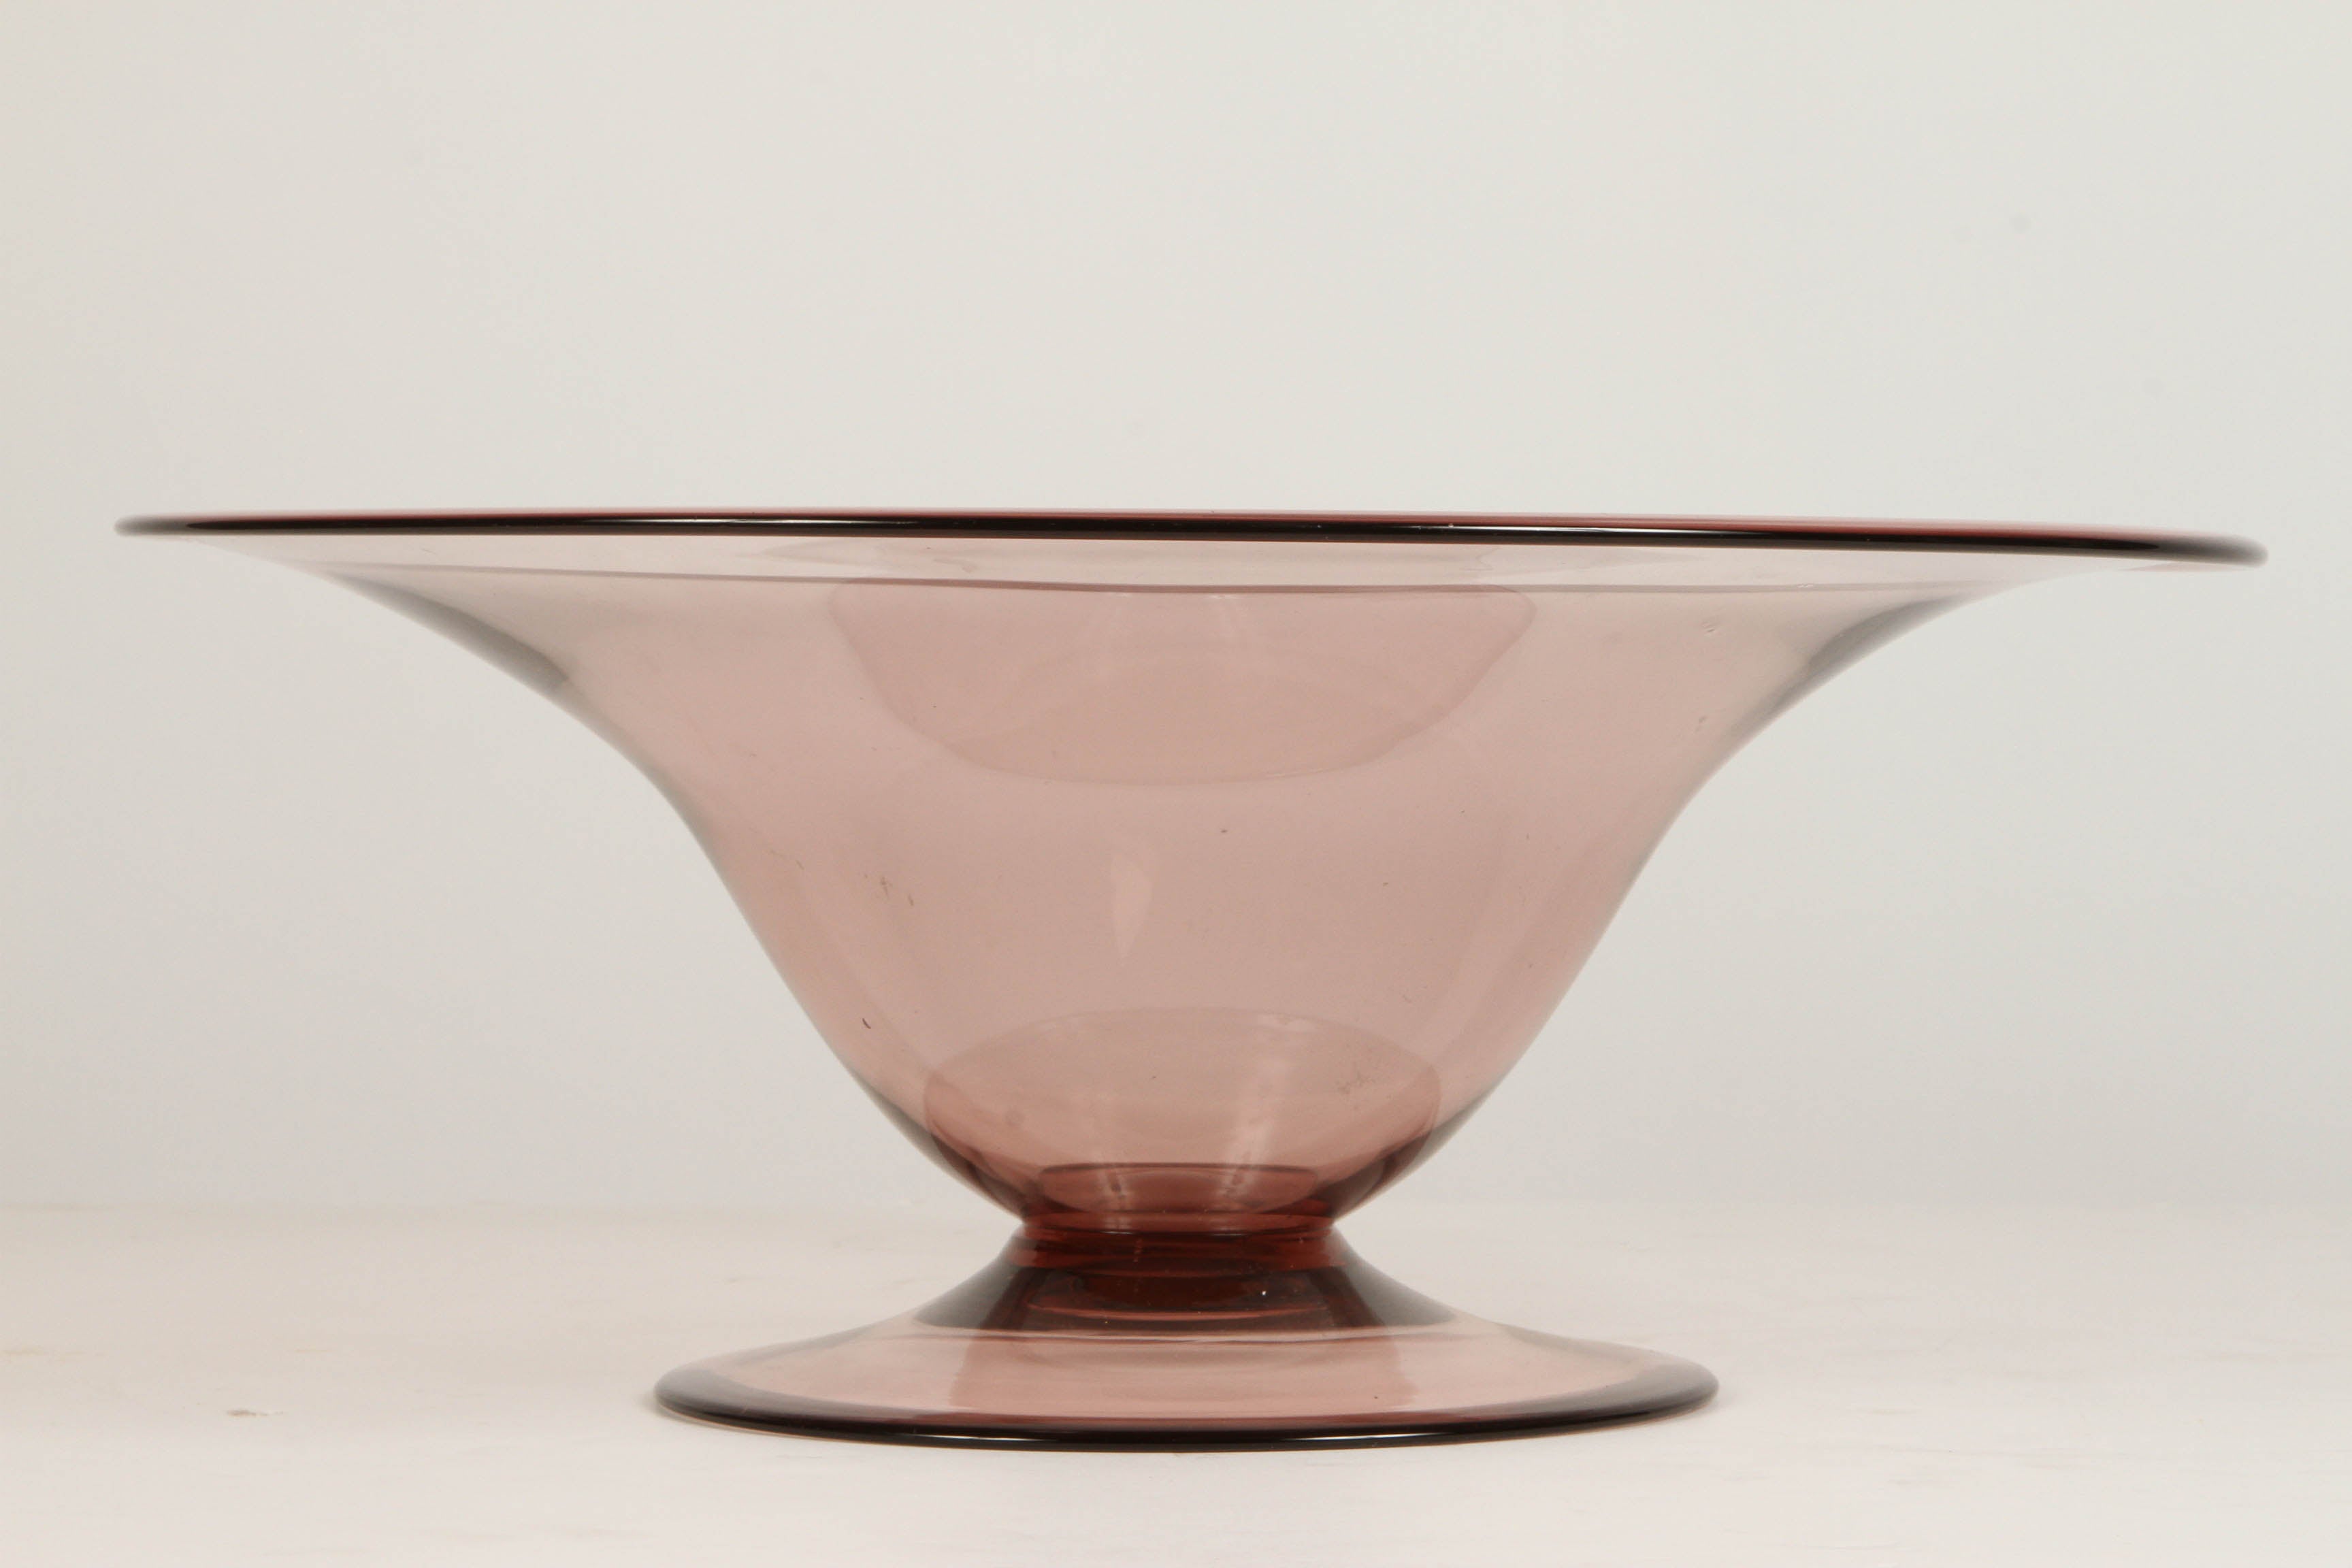 A beautiful light purple footed base glass bowl by Danish designer Jacob Bang, circa 1950.